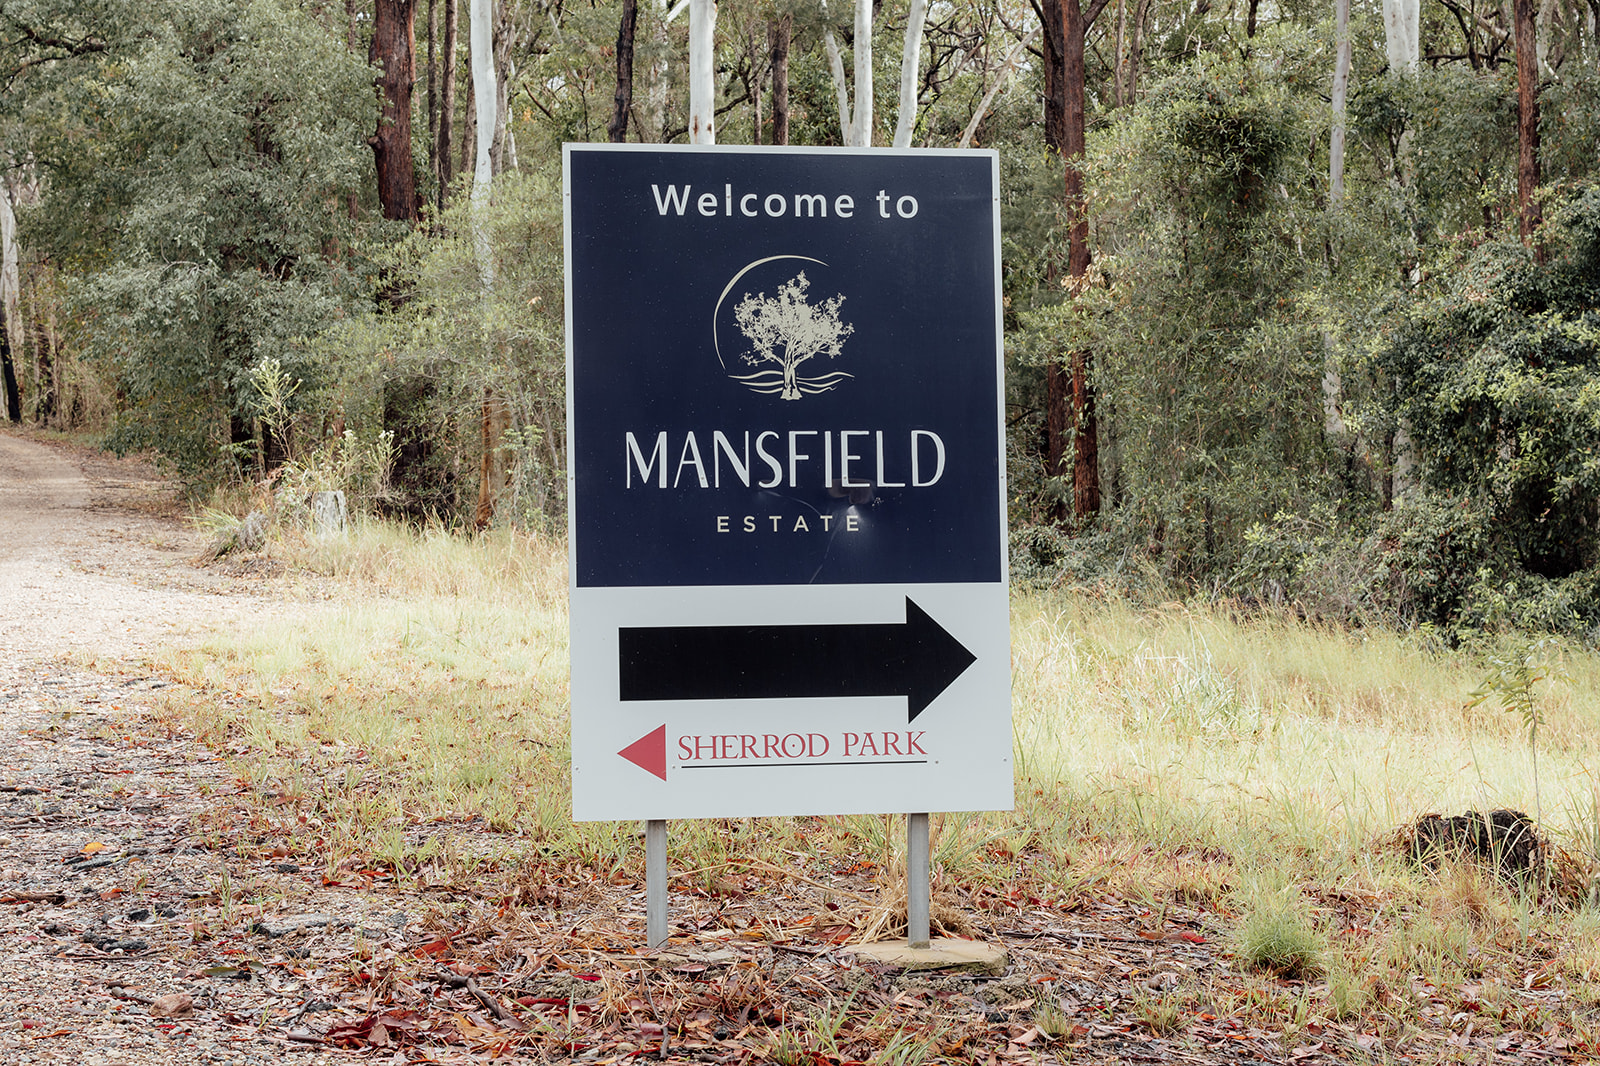 Mansfield estate sign